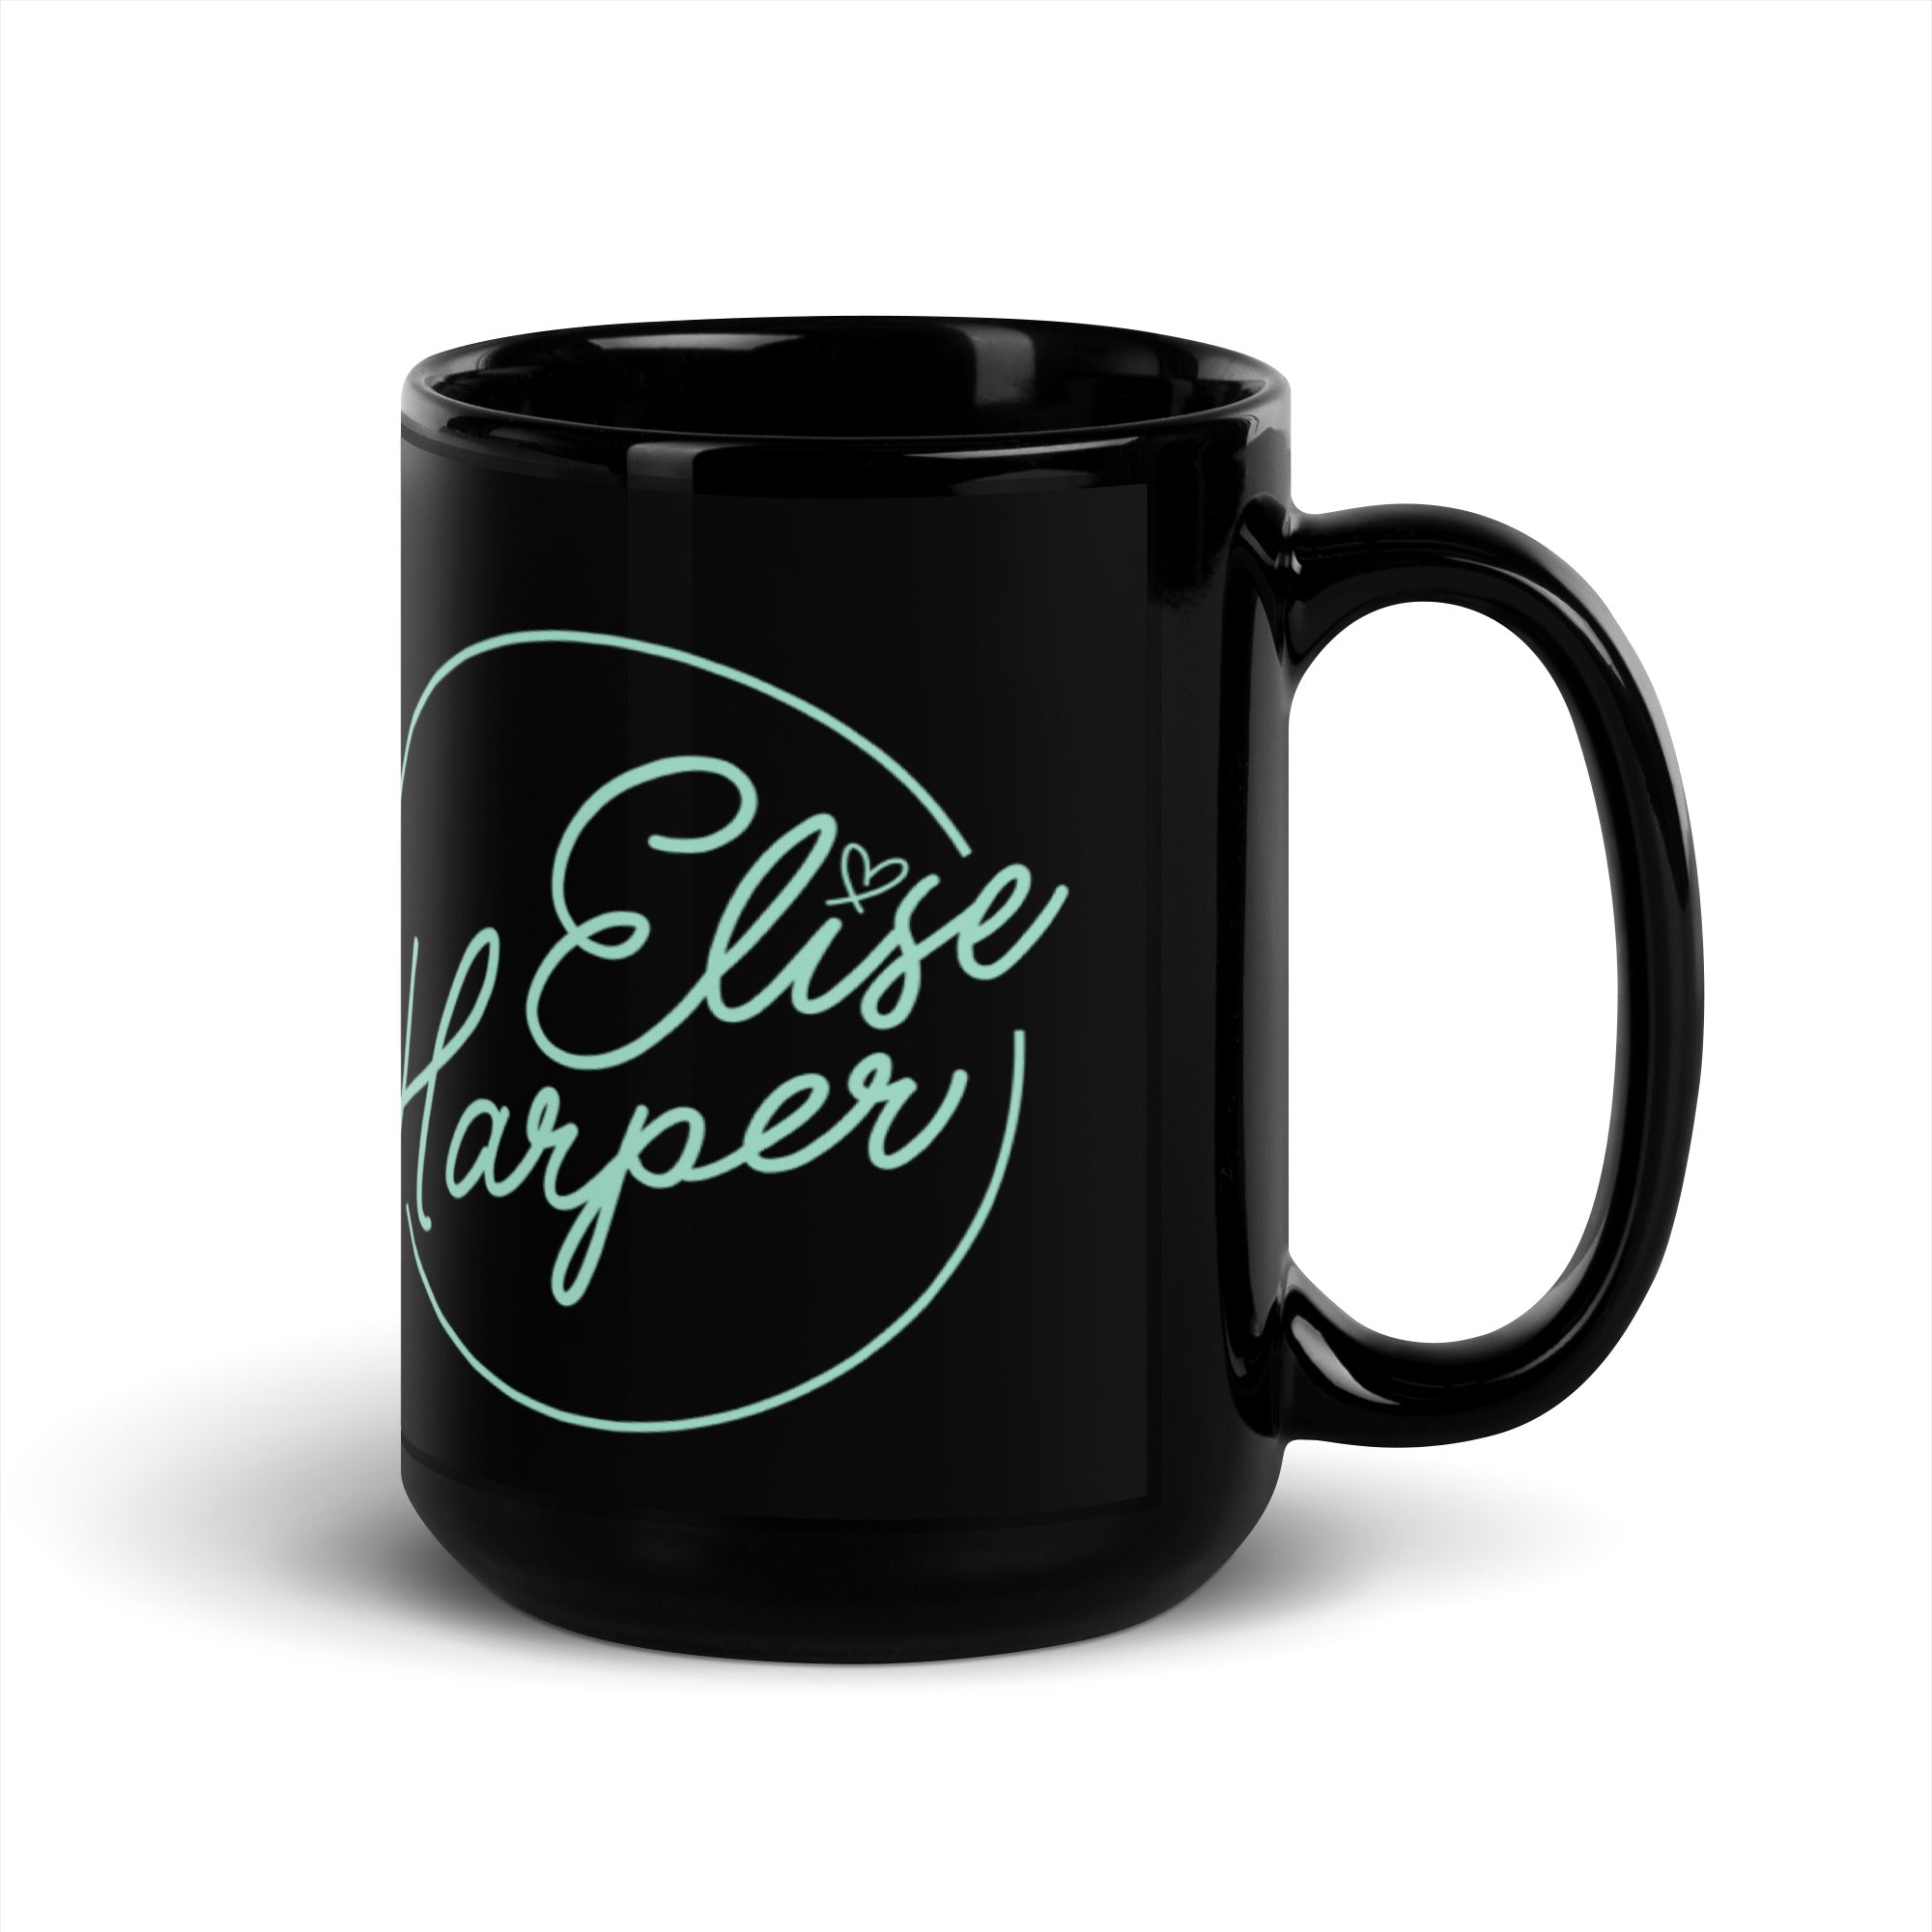 Elise Harper - Black Glossy Mug